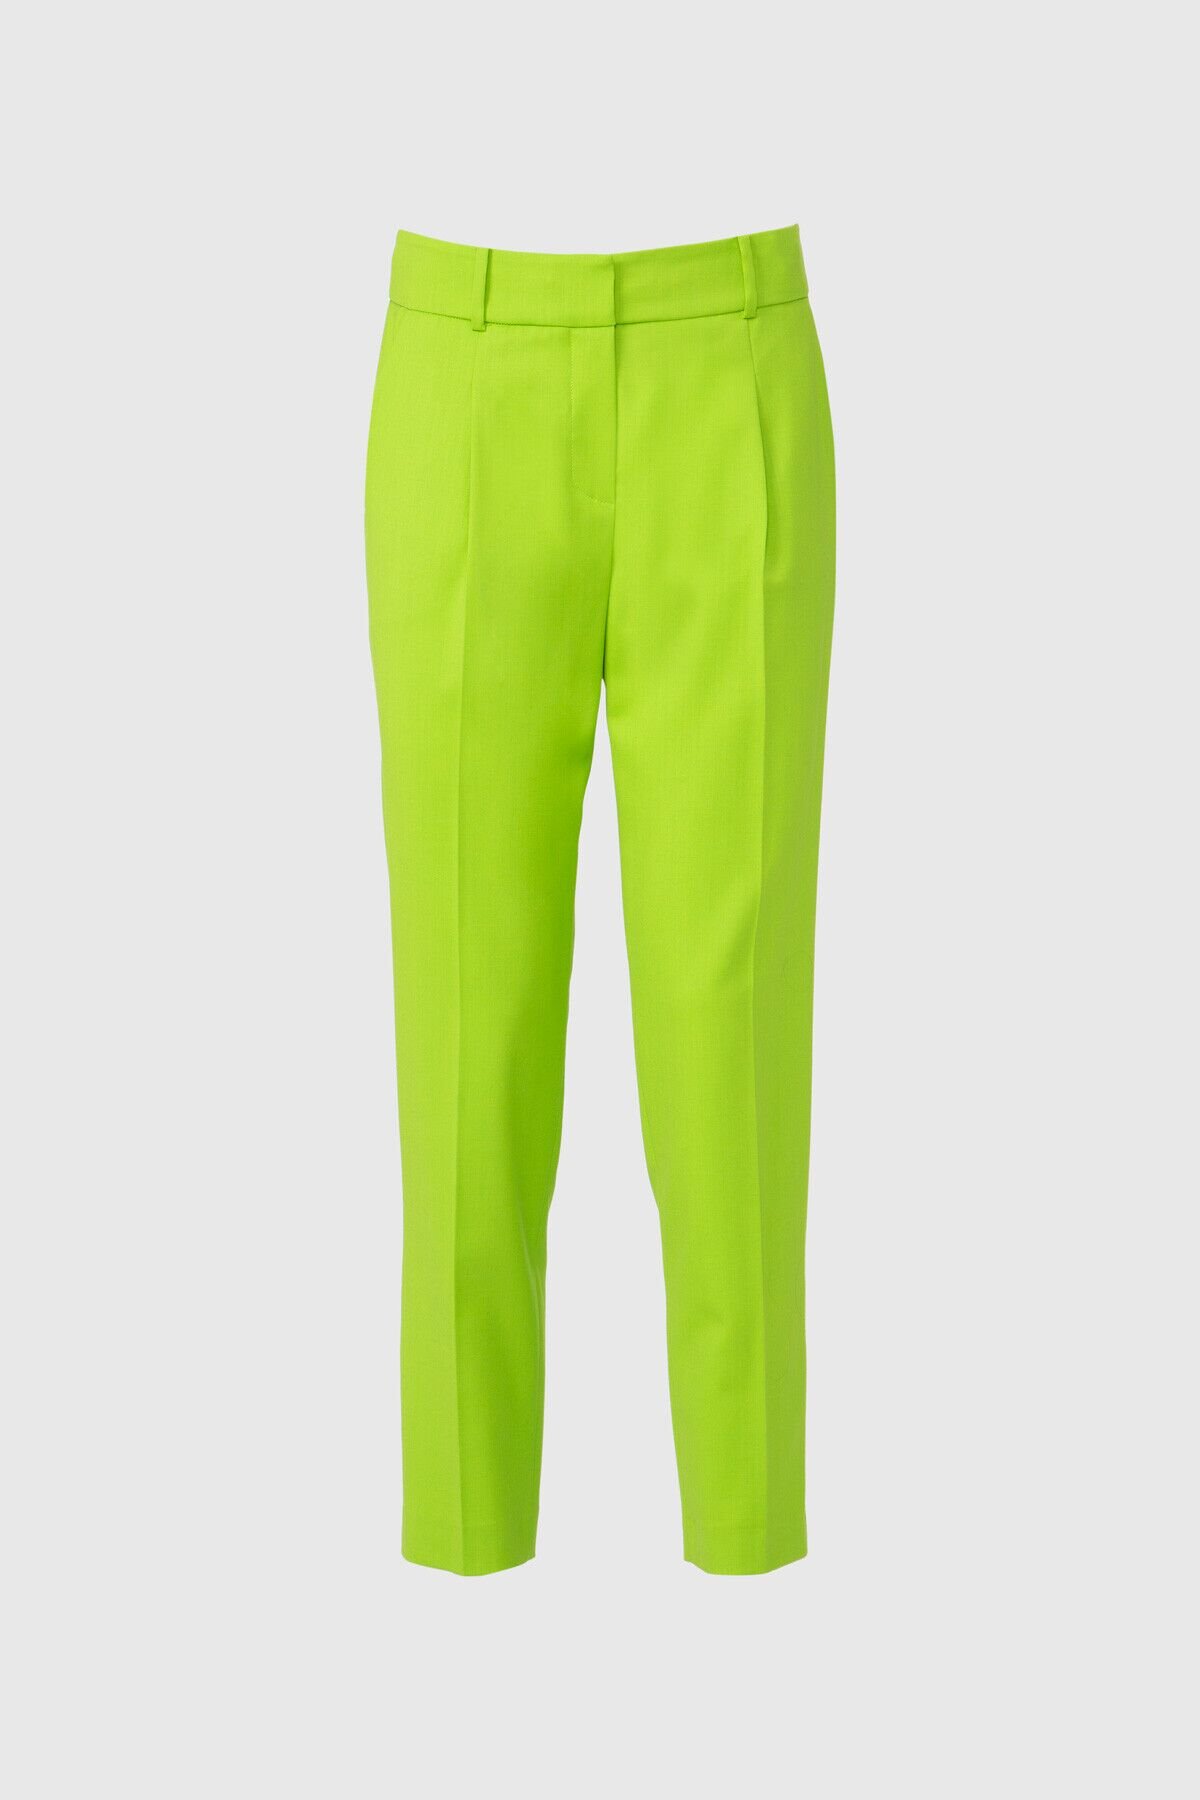 Buy Lime Green Trousers  Pants for Women by NEUDIS Online  Ajiocom